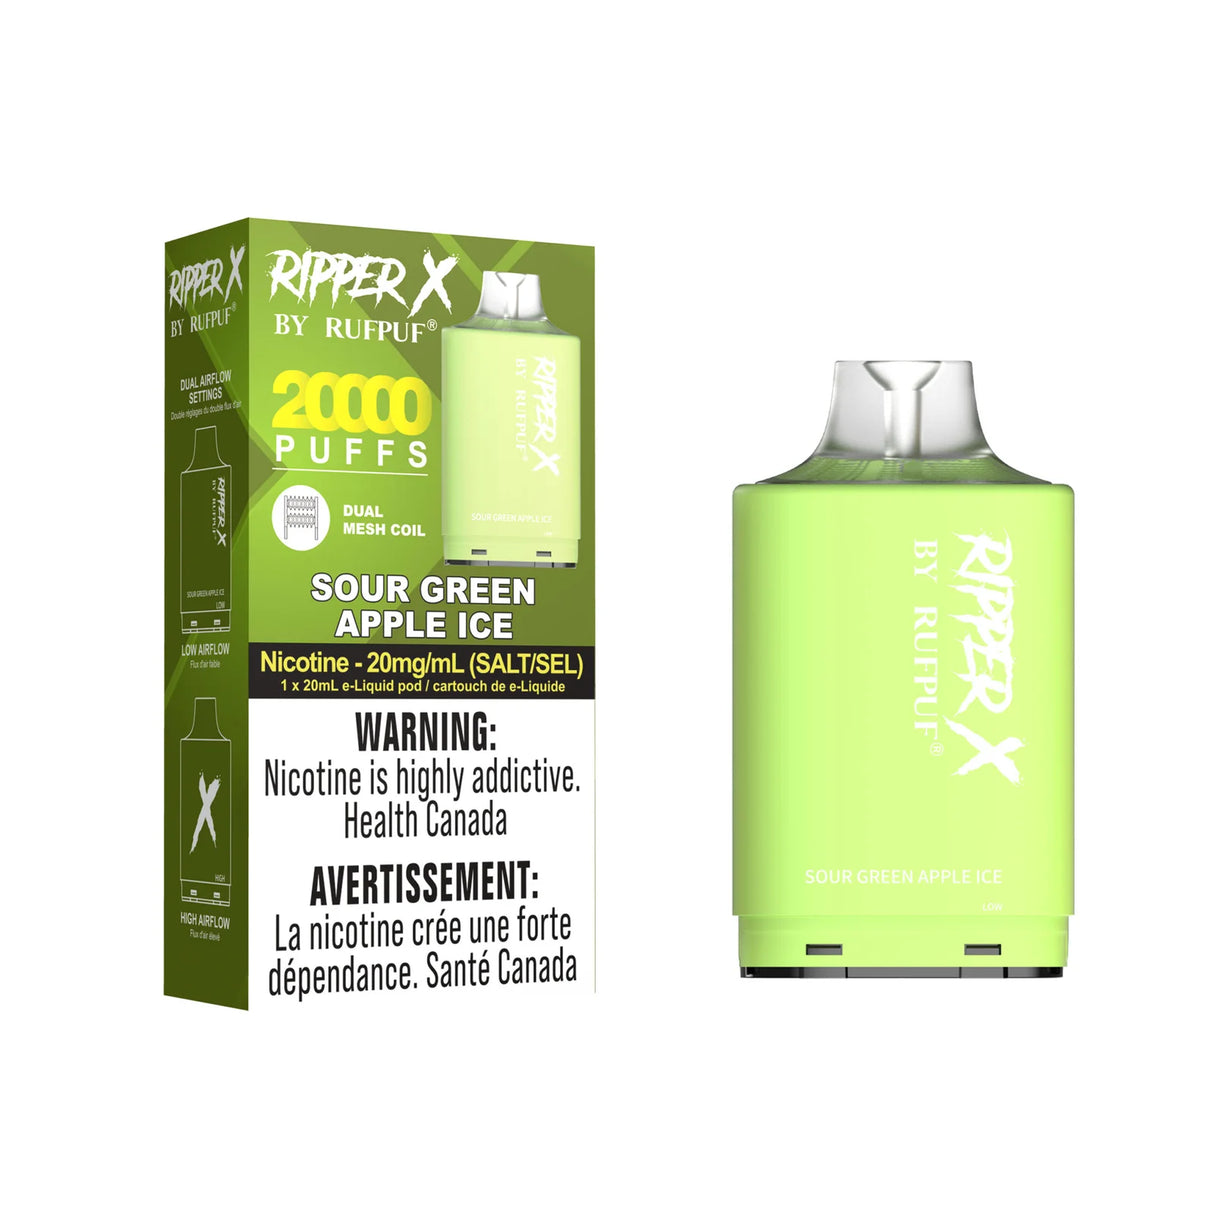 Sour Green Apple Ice Ripper X 20k